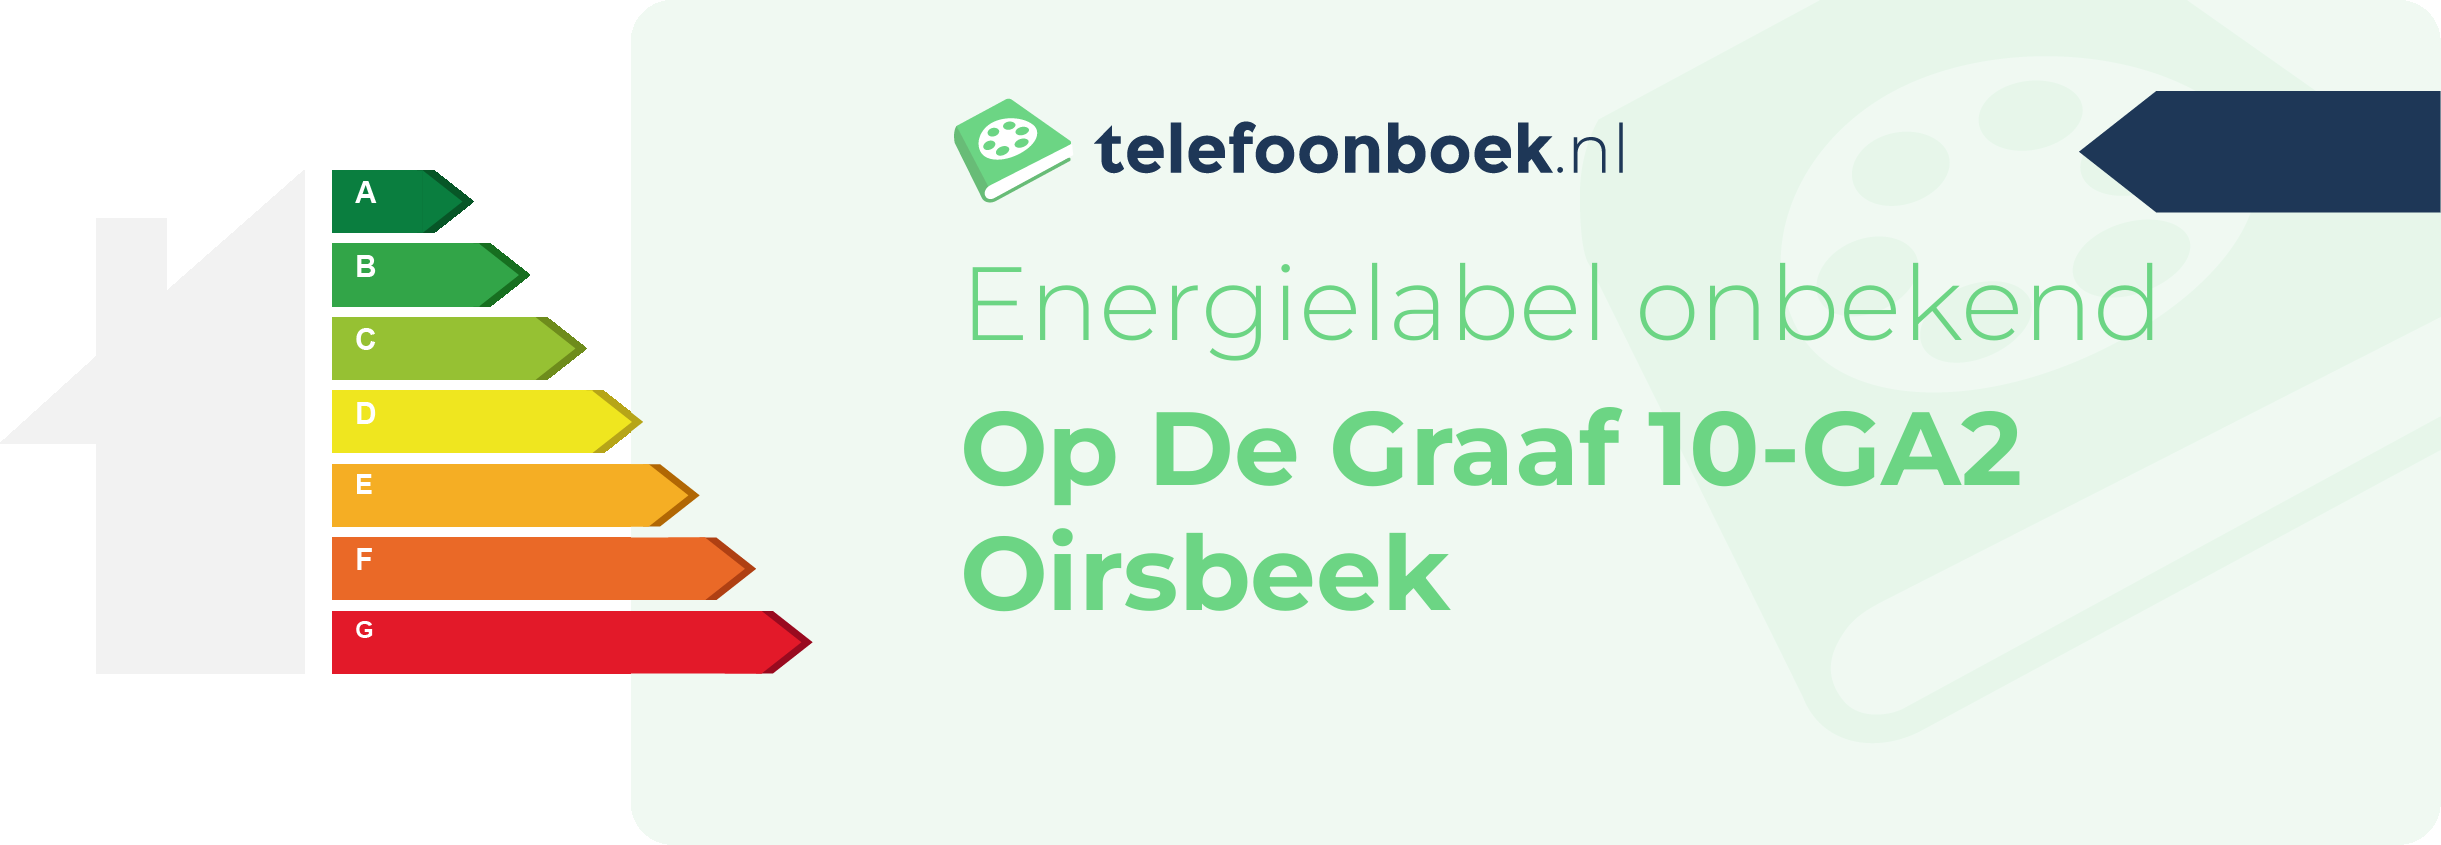 Energielabel Op De Graaf 10-GA2 Oirsbeek